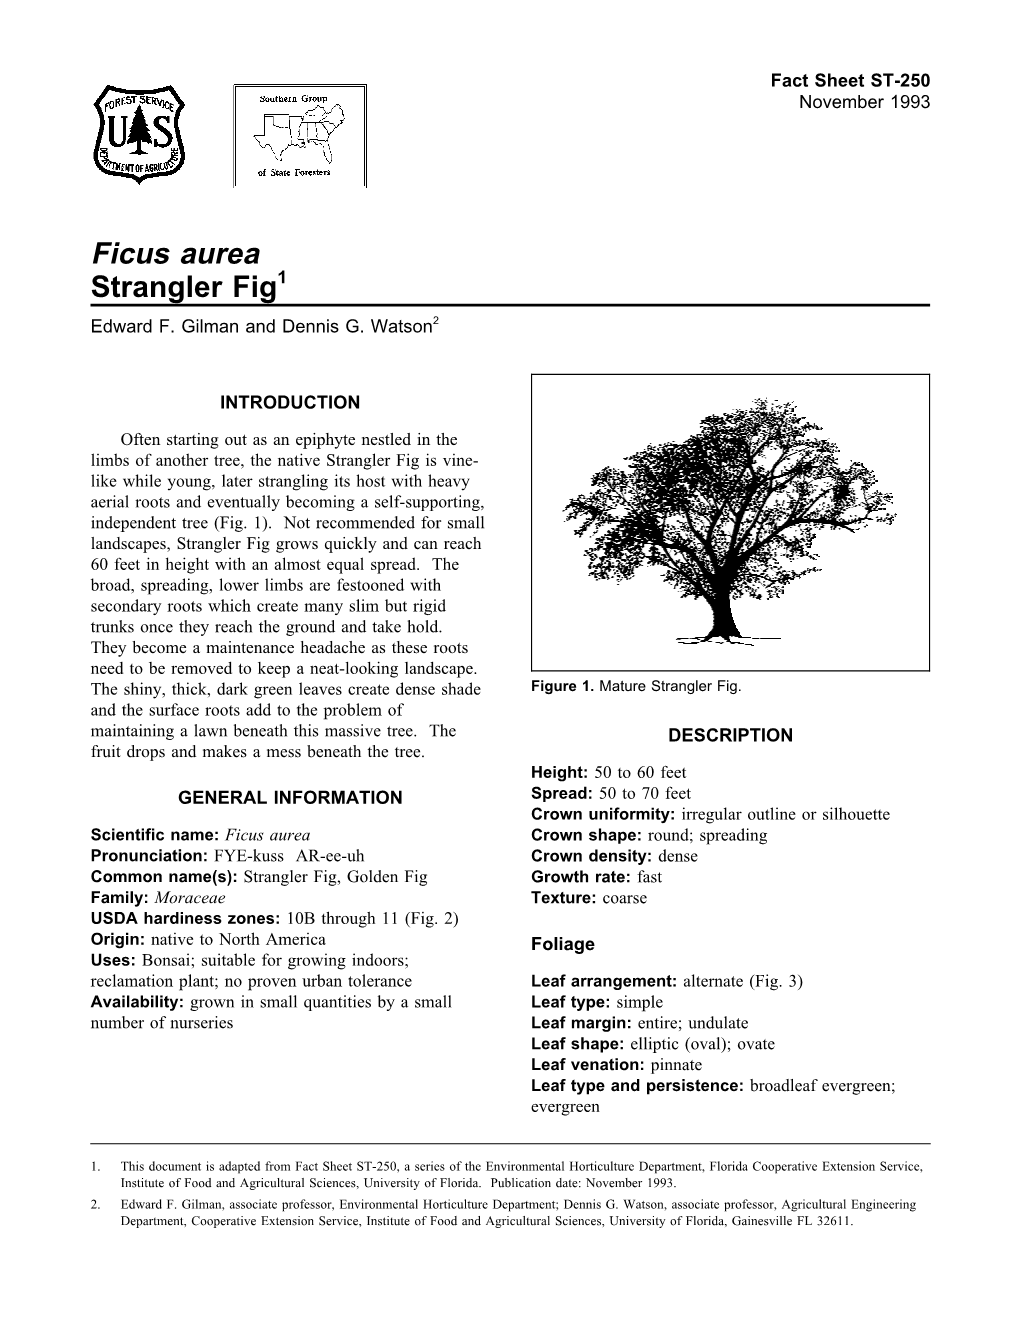 Ficus Aurea Strangler Fig1 Edward F